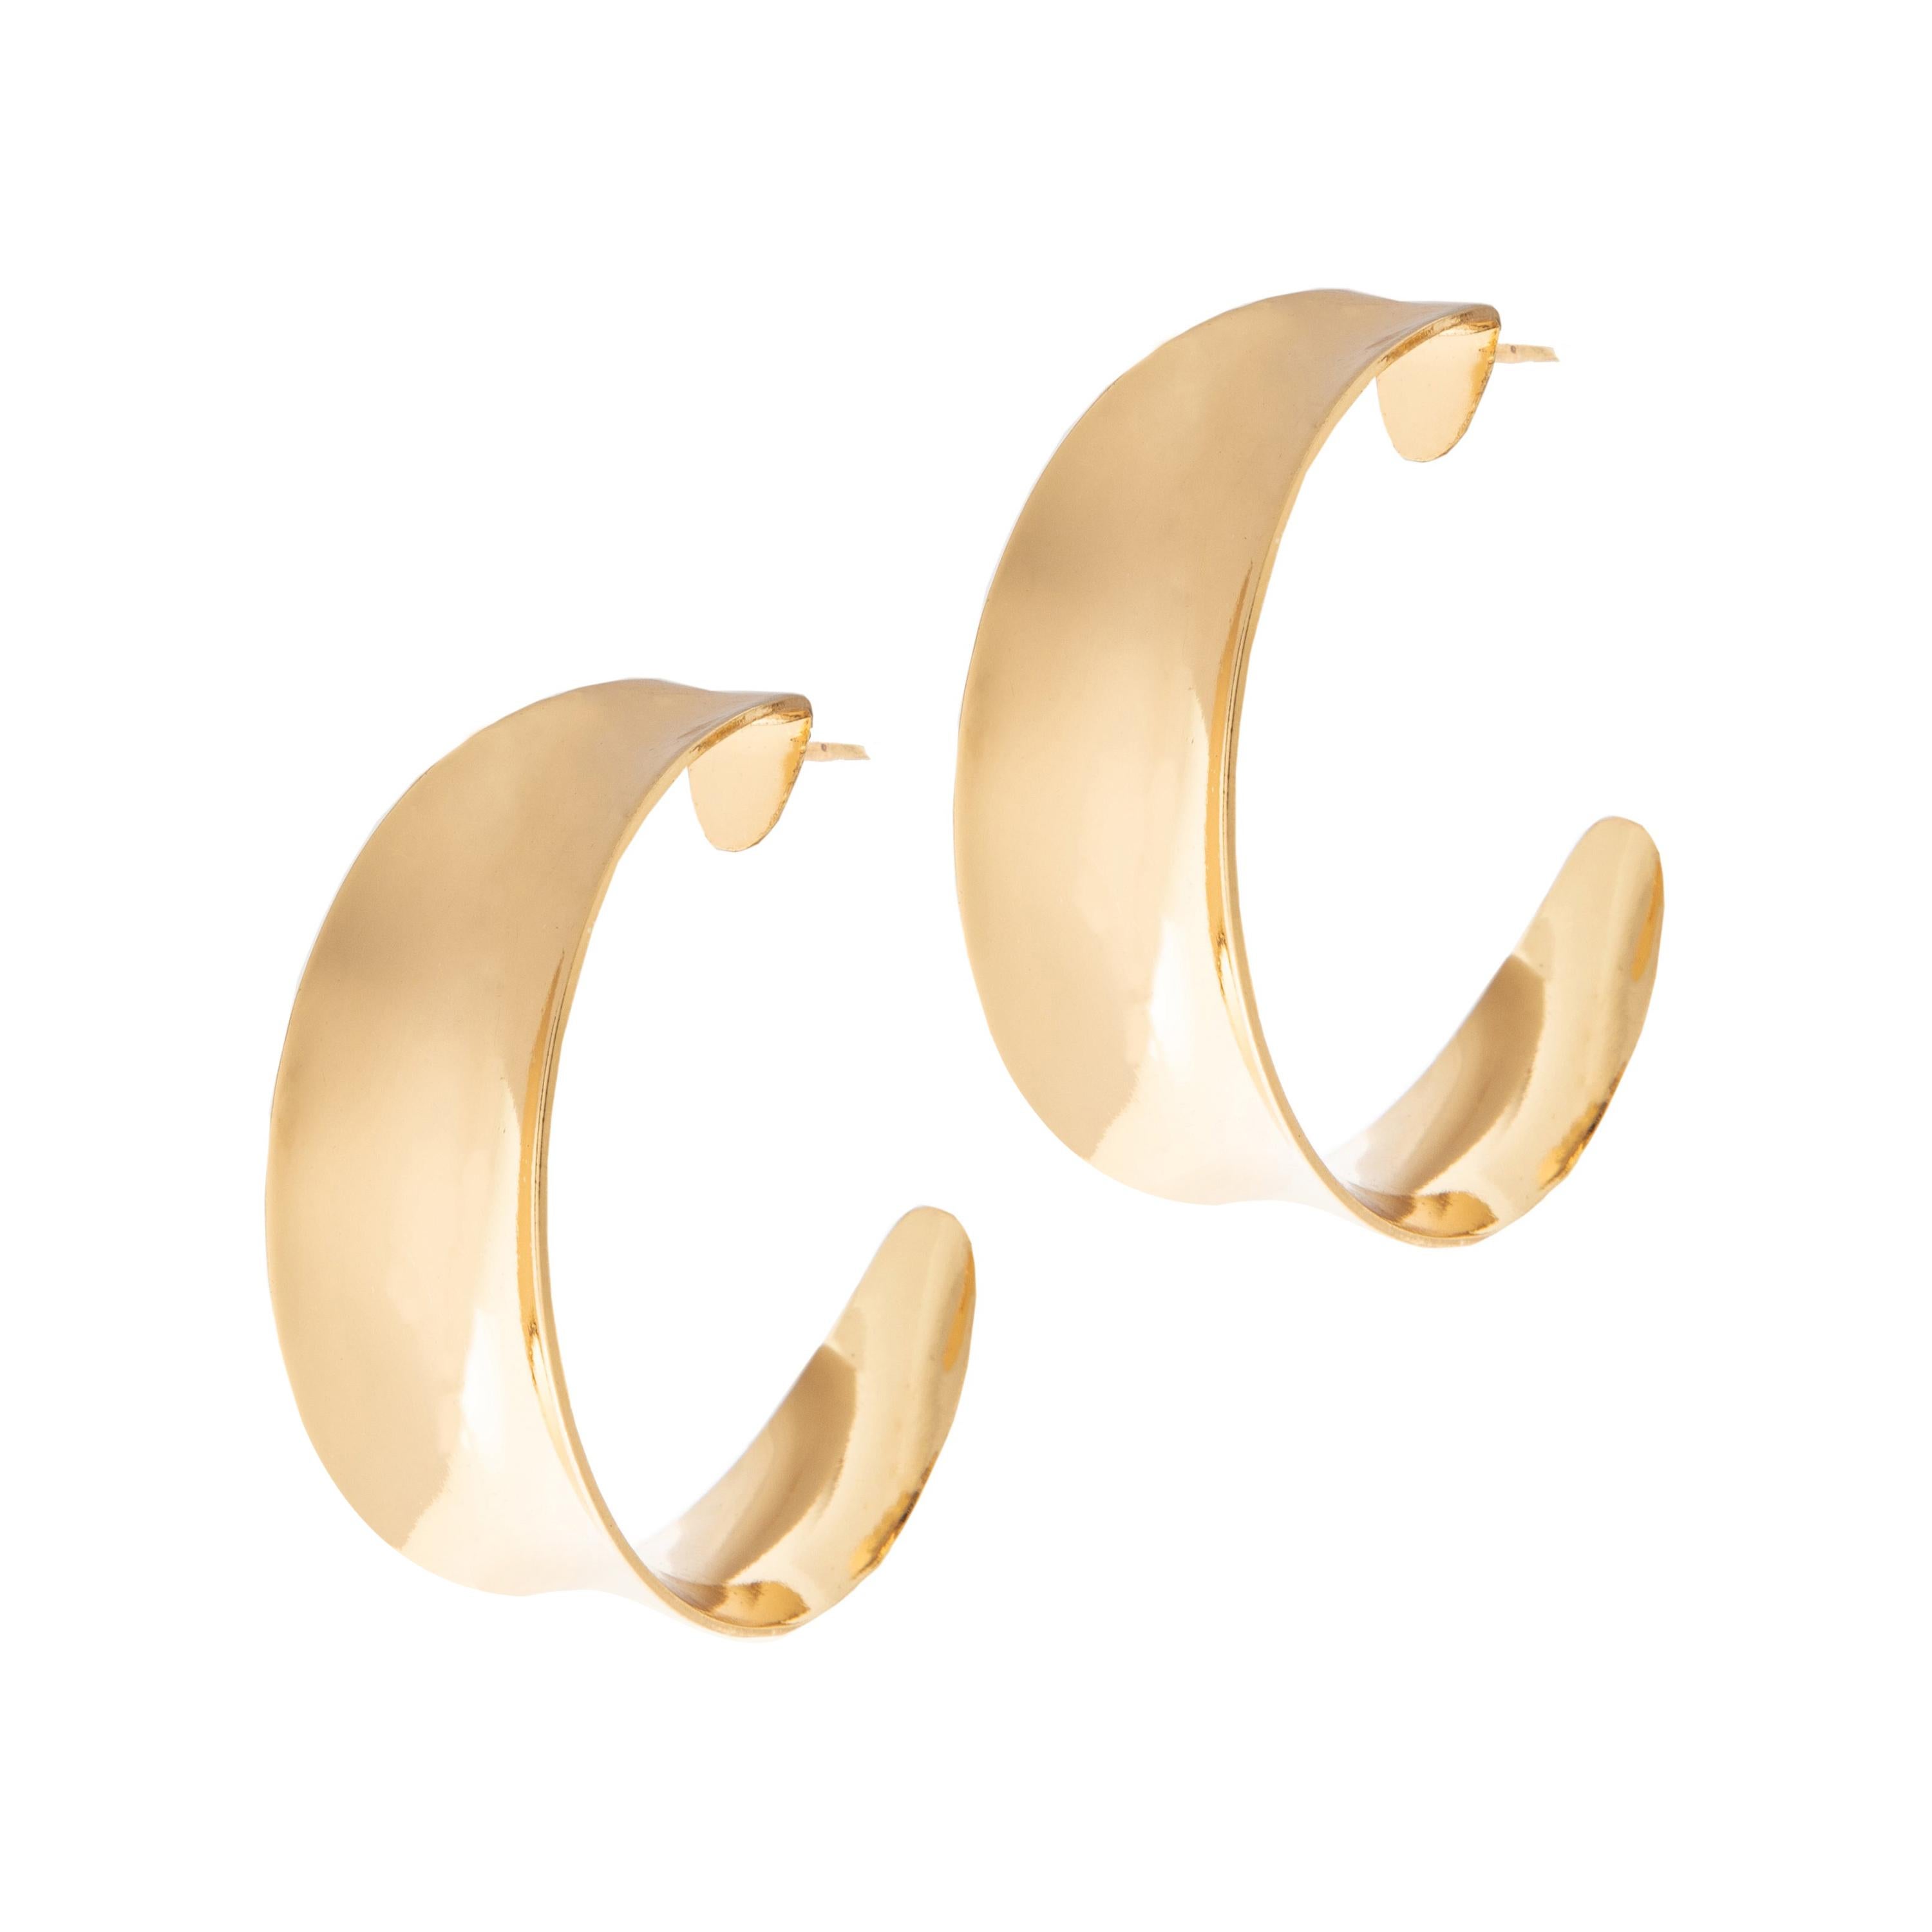 Hoops Miranda 24kt gold plated brass earrings NWOT